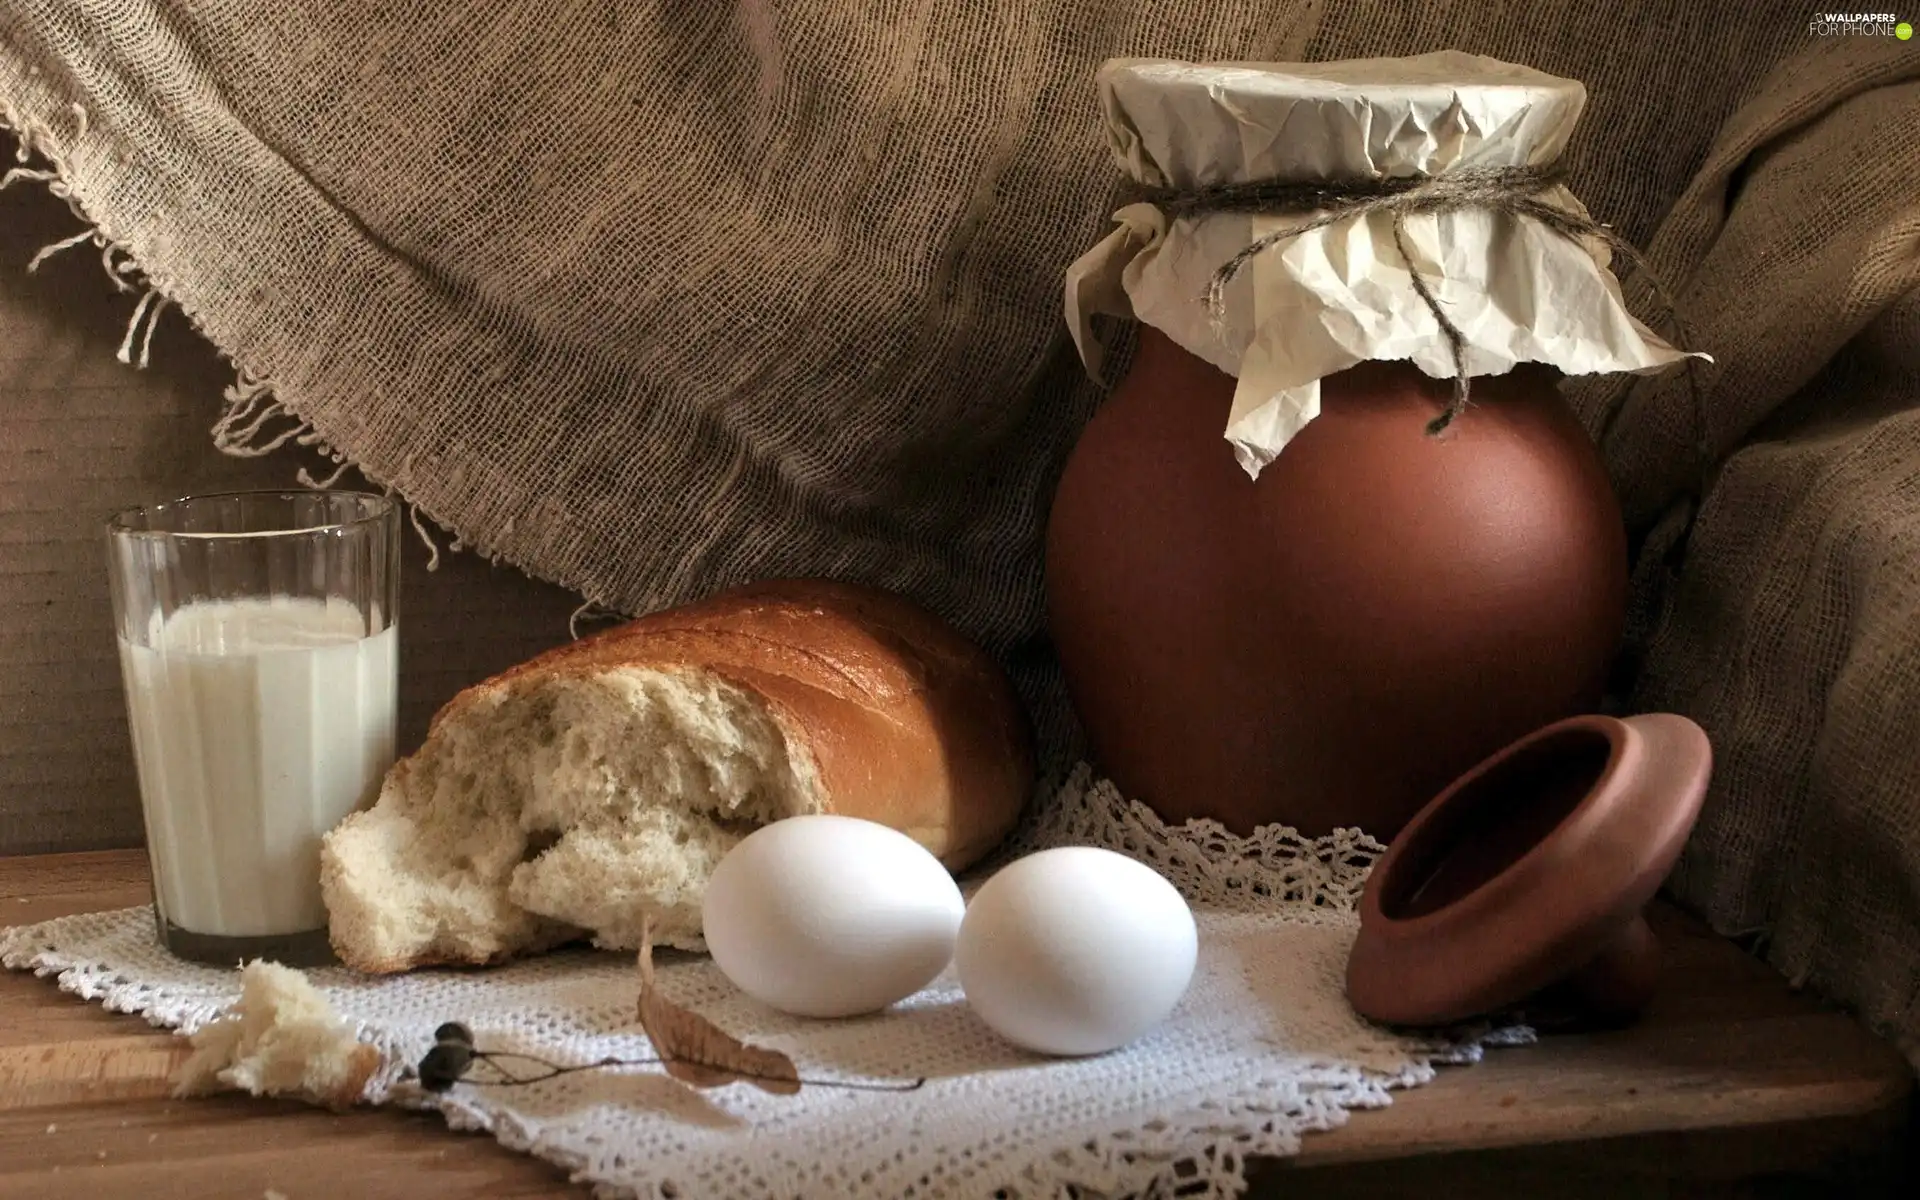 pitcher, eggs, bread, milk